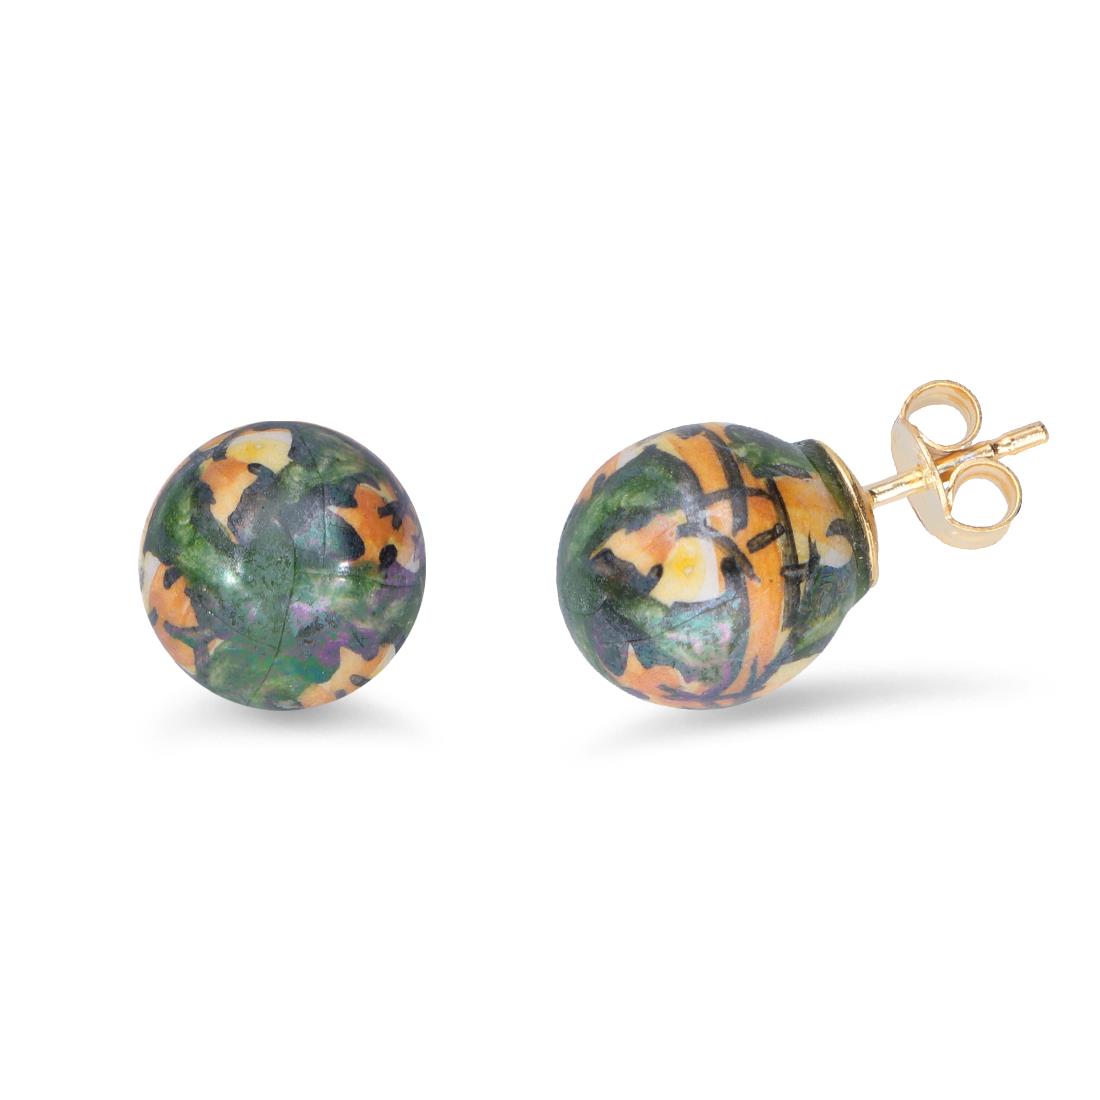 Aqua green ceramic lobe earrings - LE PERLE DI CALTAGIRONE